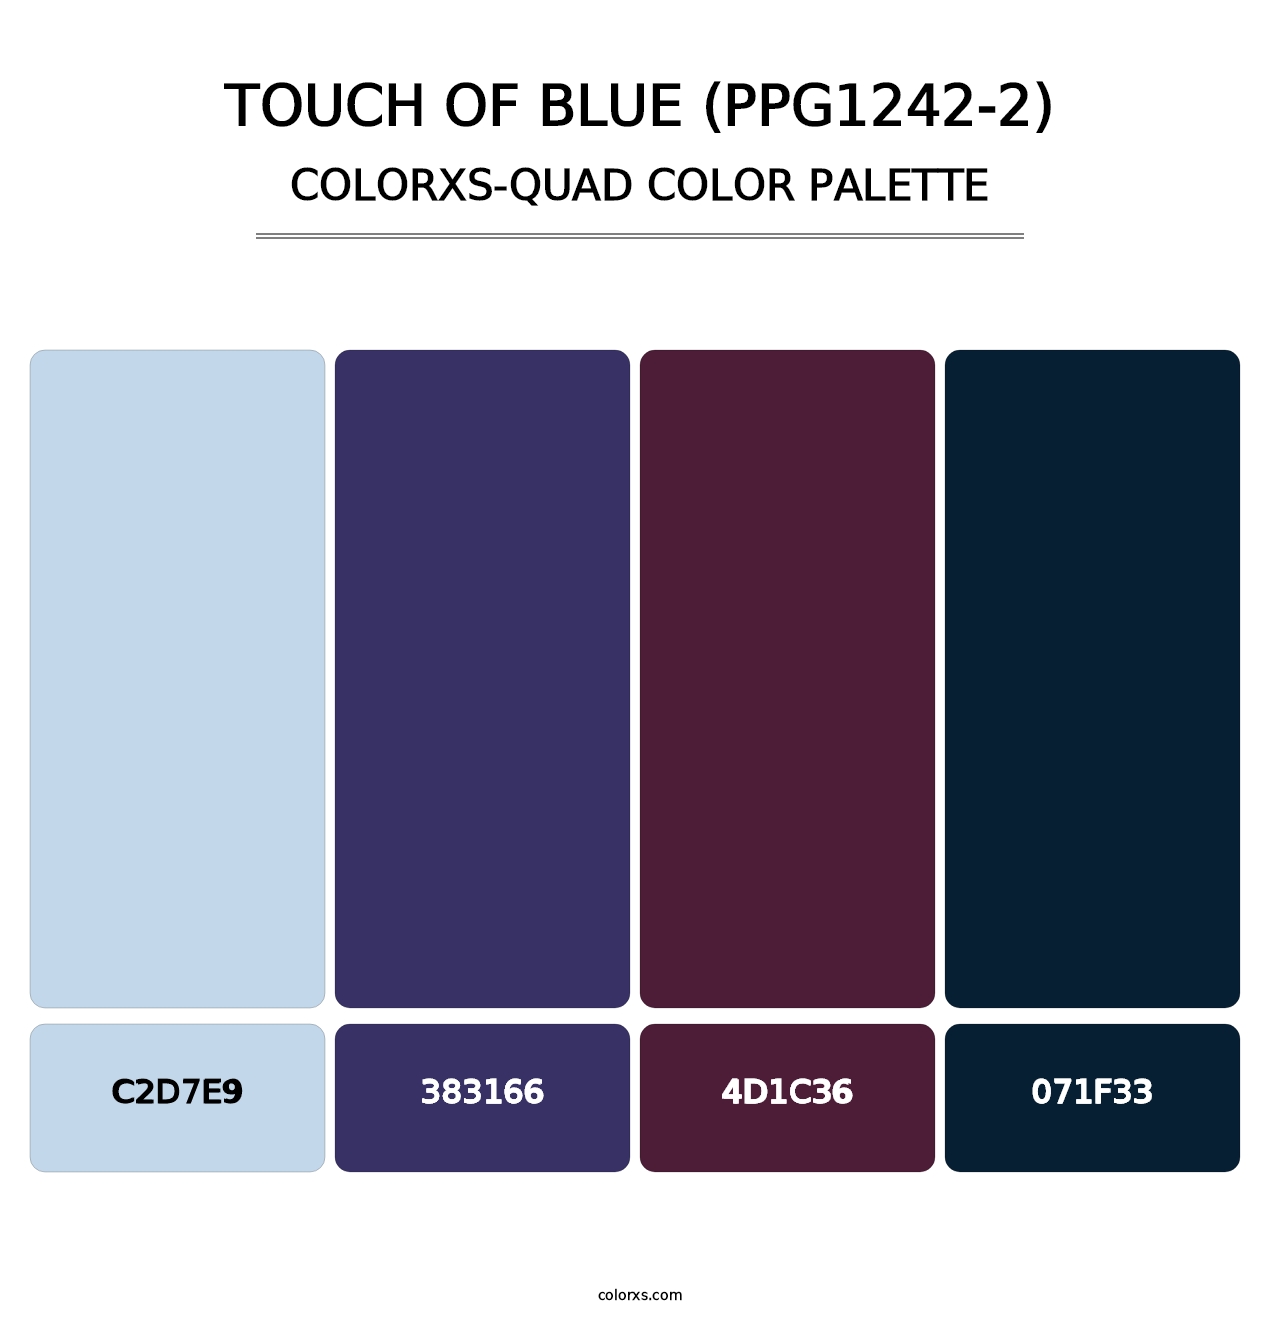 Touch Of Blue (PPG1242-2) - Colorxs Quad Palette